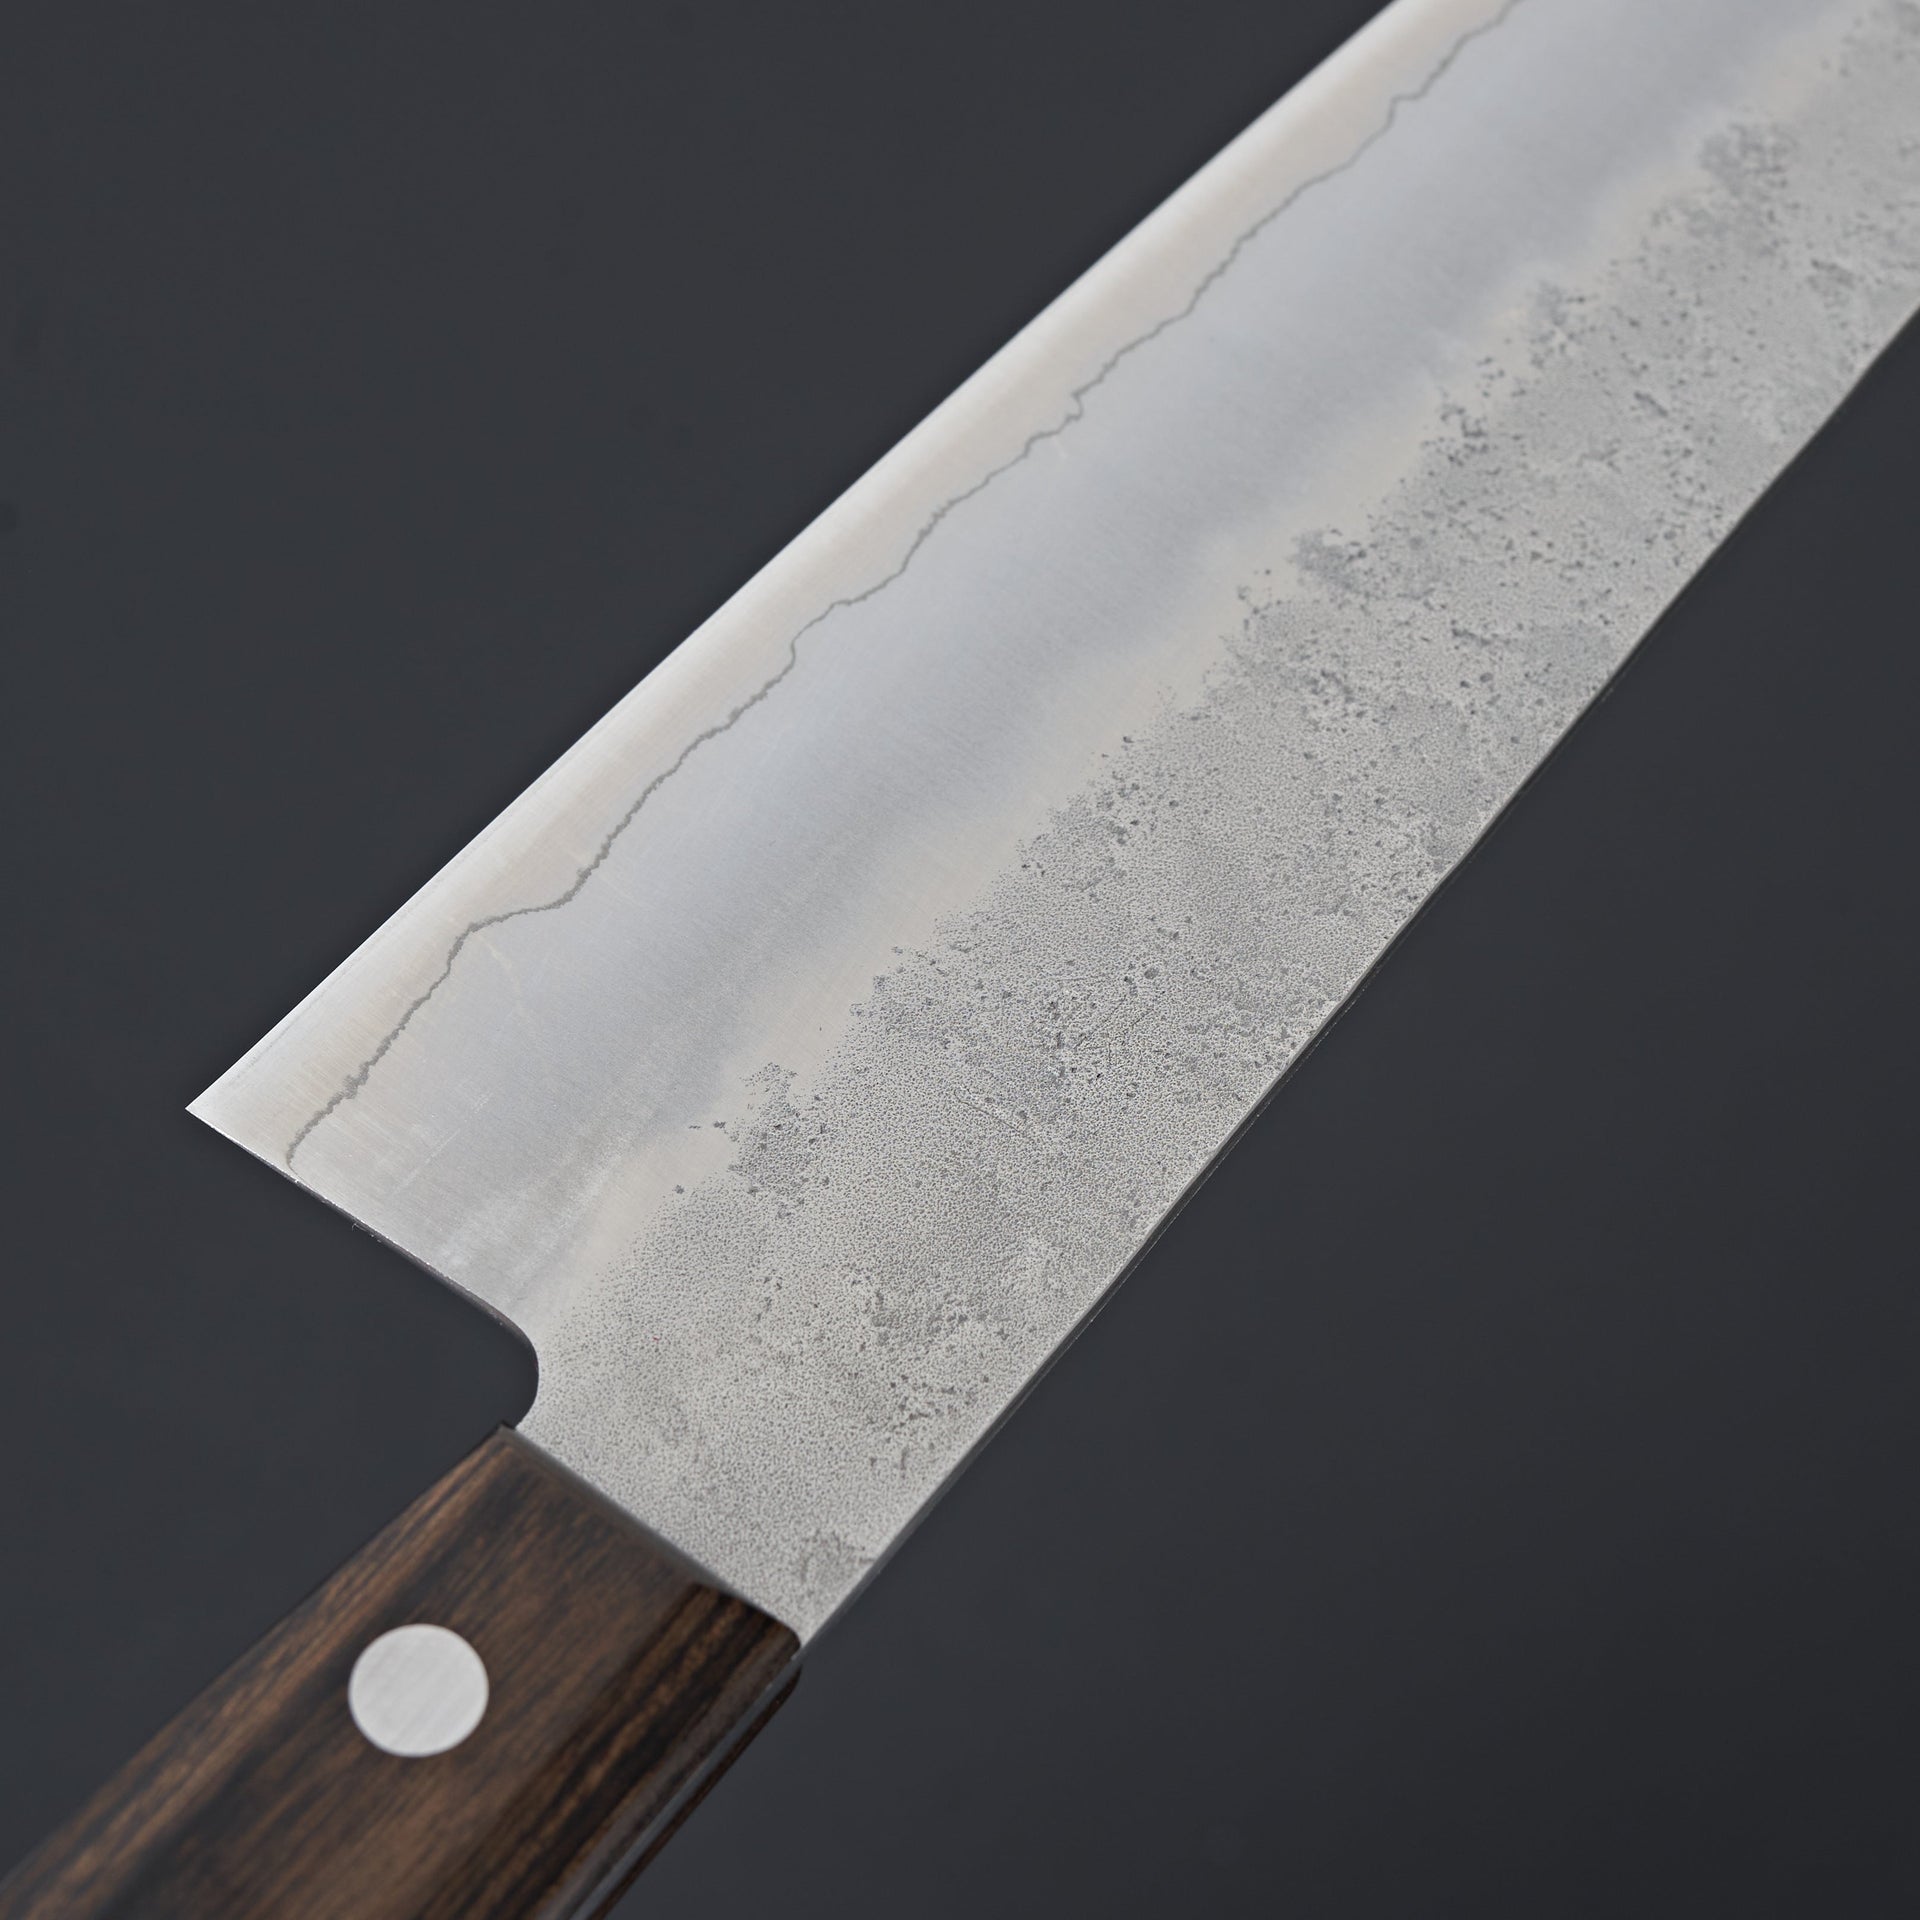 Tsunehisa Ginsan Western Nashiji Santoku 180mm (Bolsterless)-Knife-Tsunehisa-Carbon Knife Co